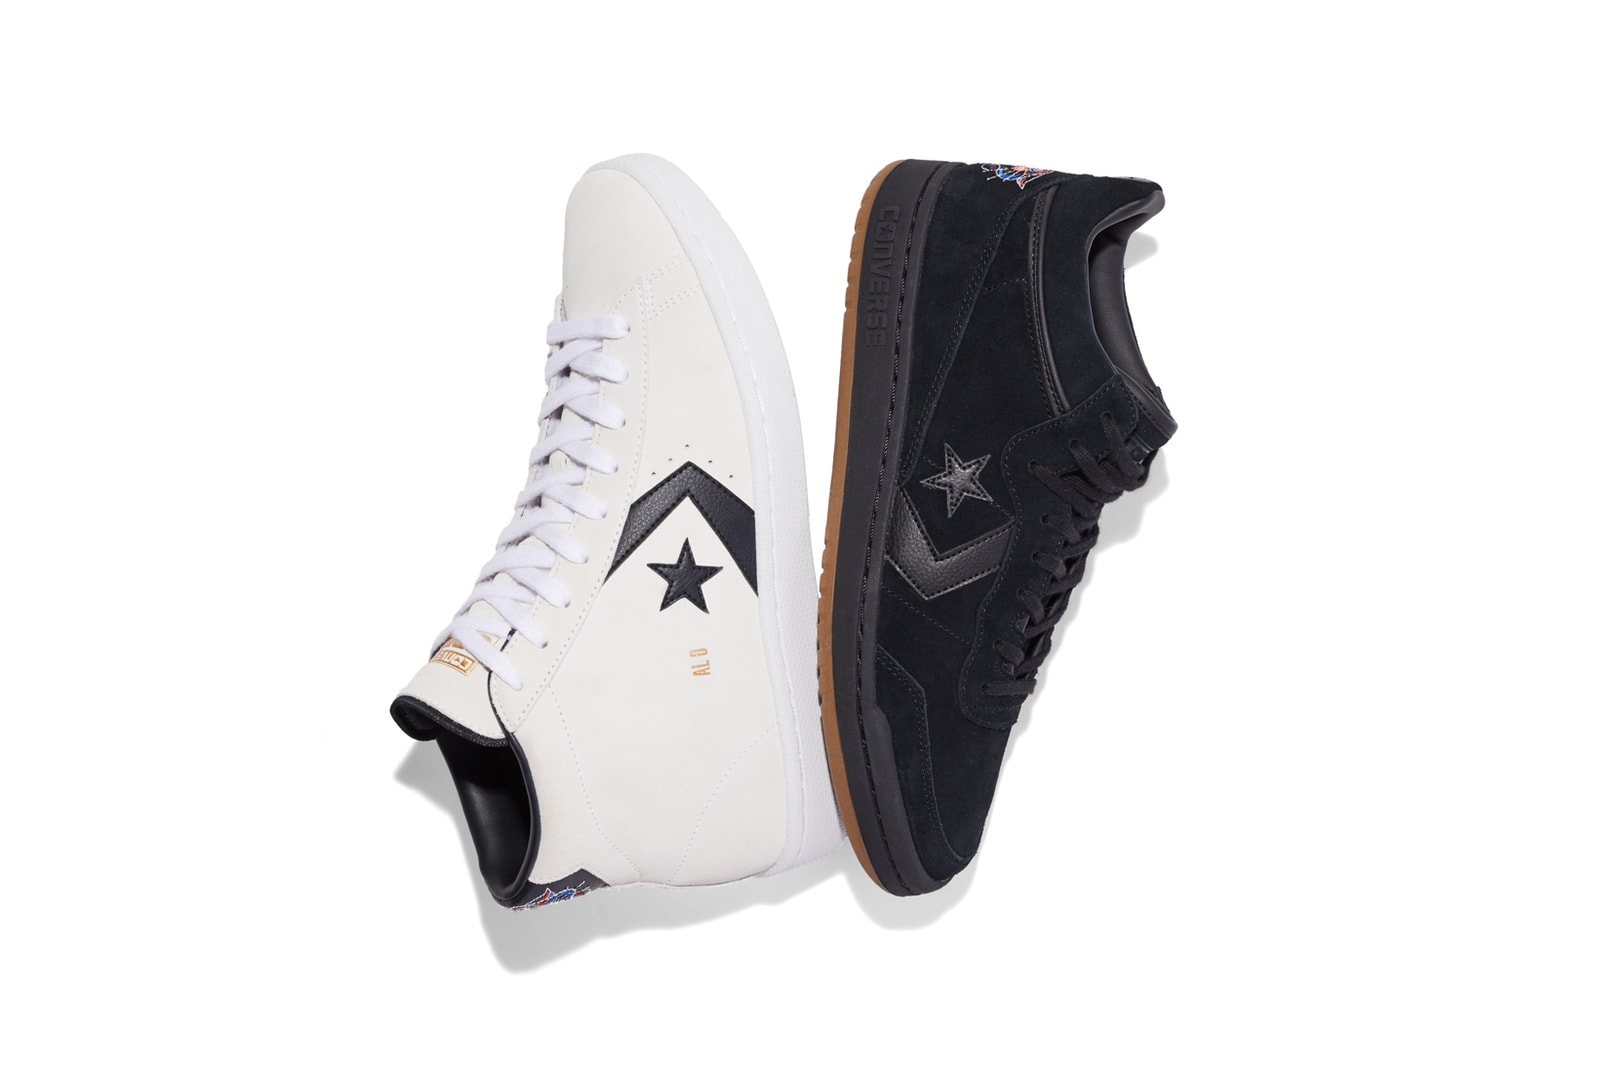 Al Davis x Converse CONS Court Pack Sneakers Hypebeast